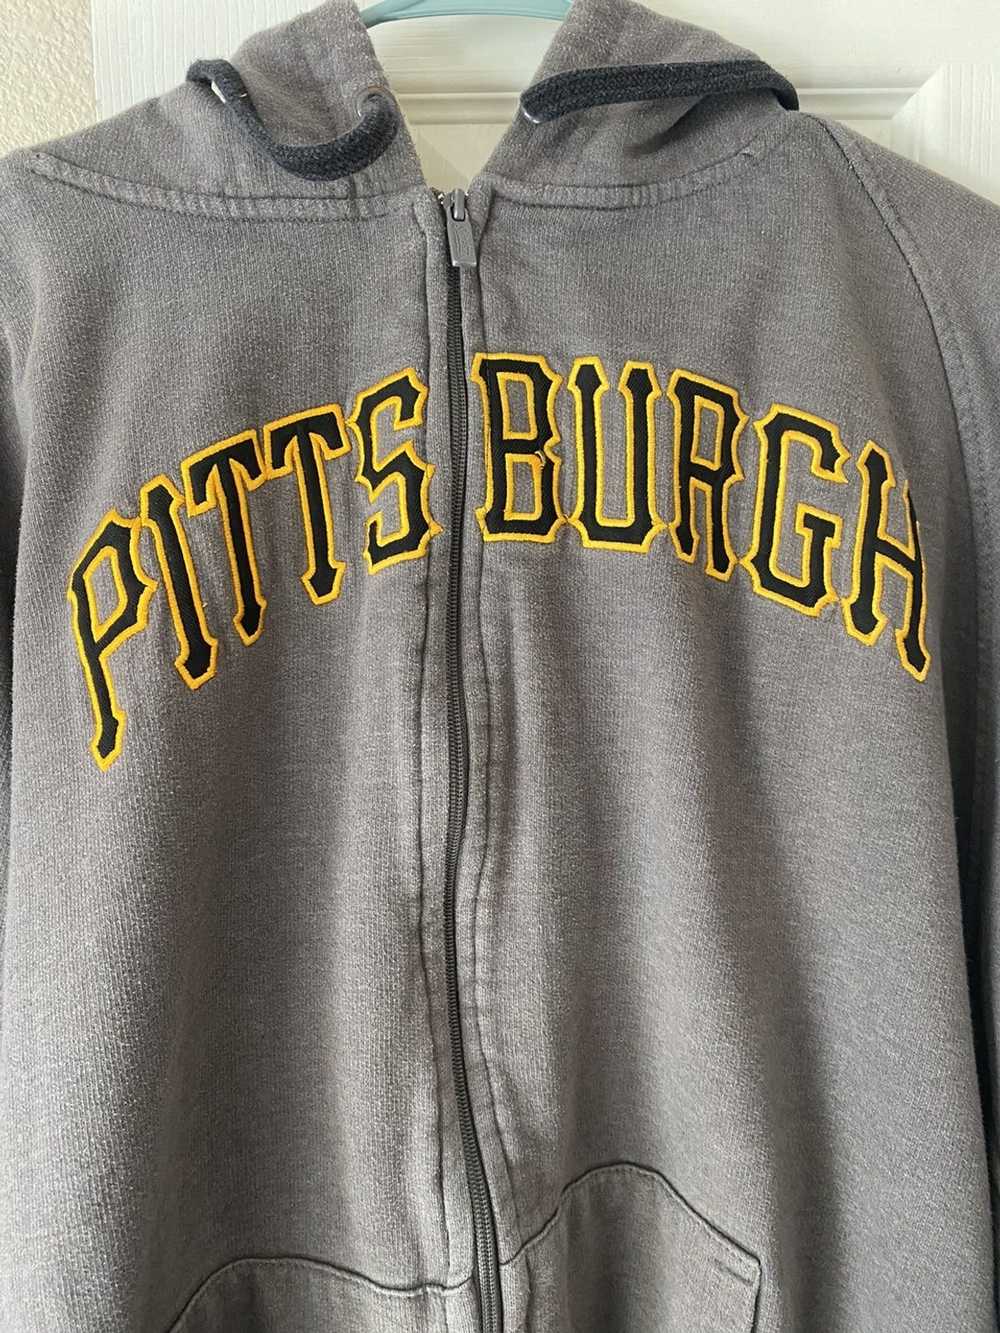 MLB Pittsburg Pirates Jacket/Sweatshirt - image 2